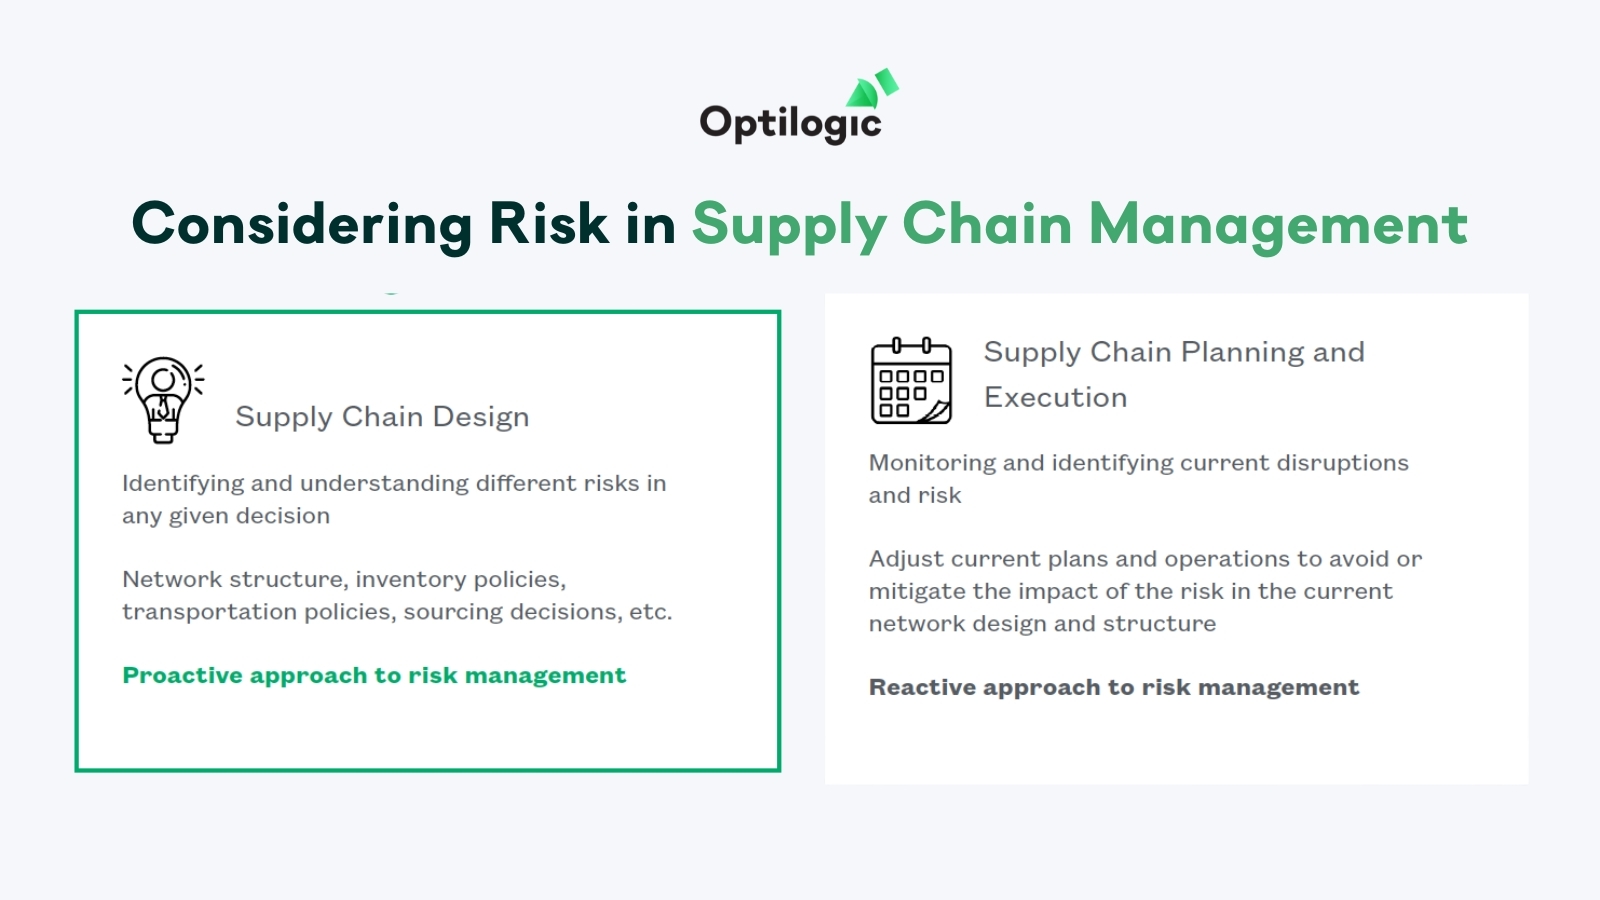 Risk in supply chain management